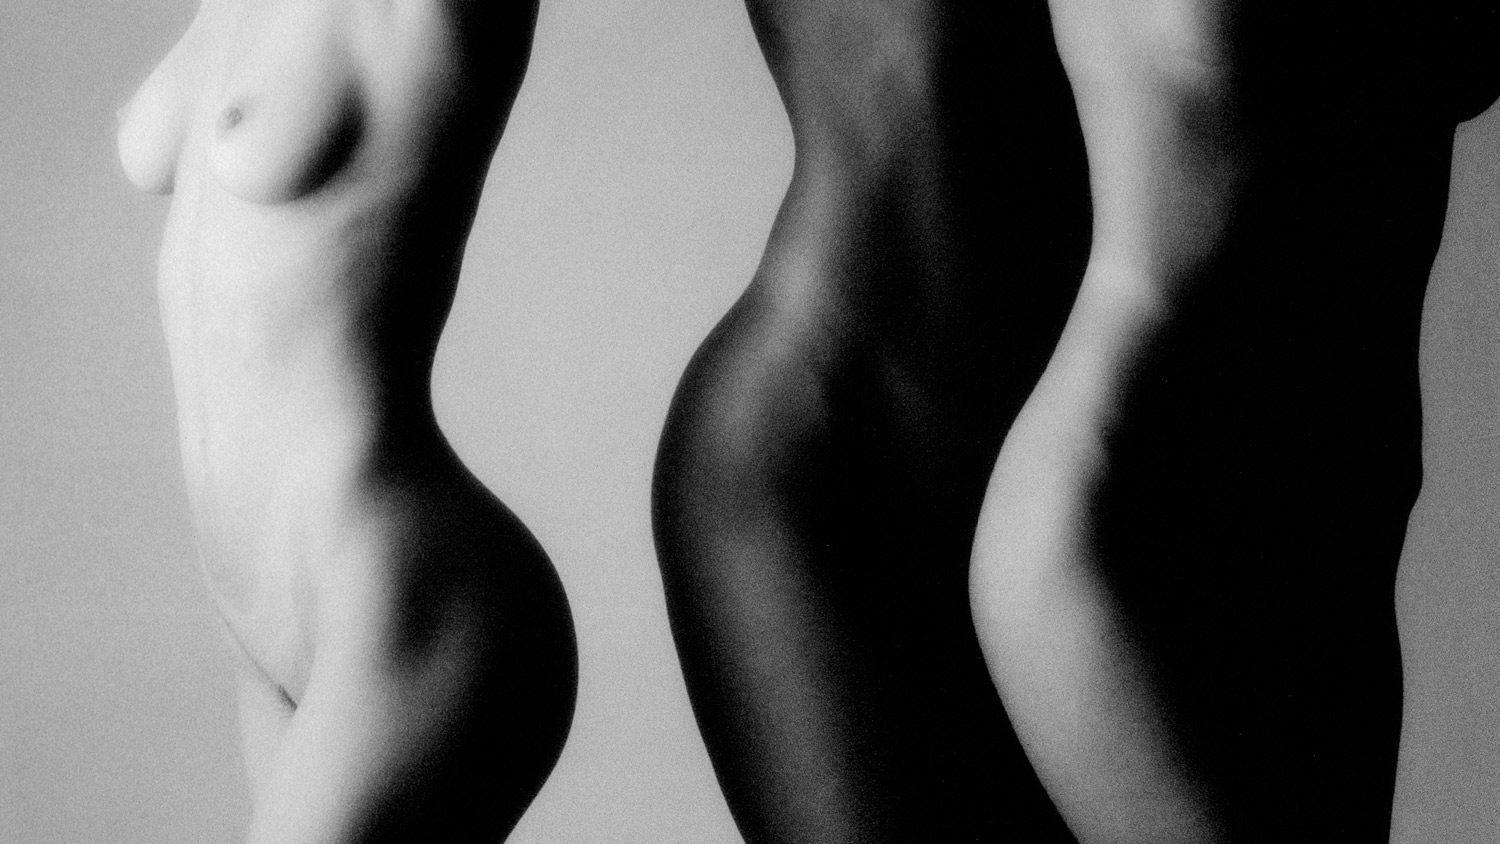 Robert Farber Nude Photograph - Three Torsos